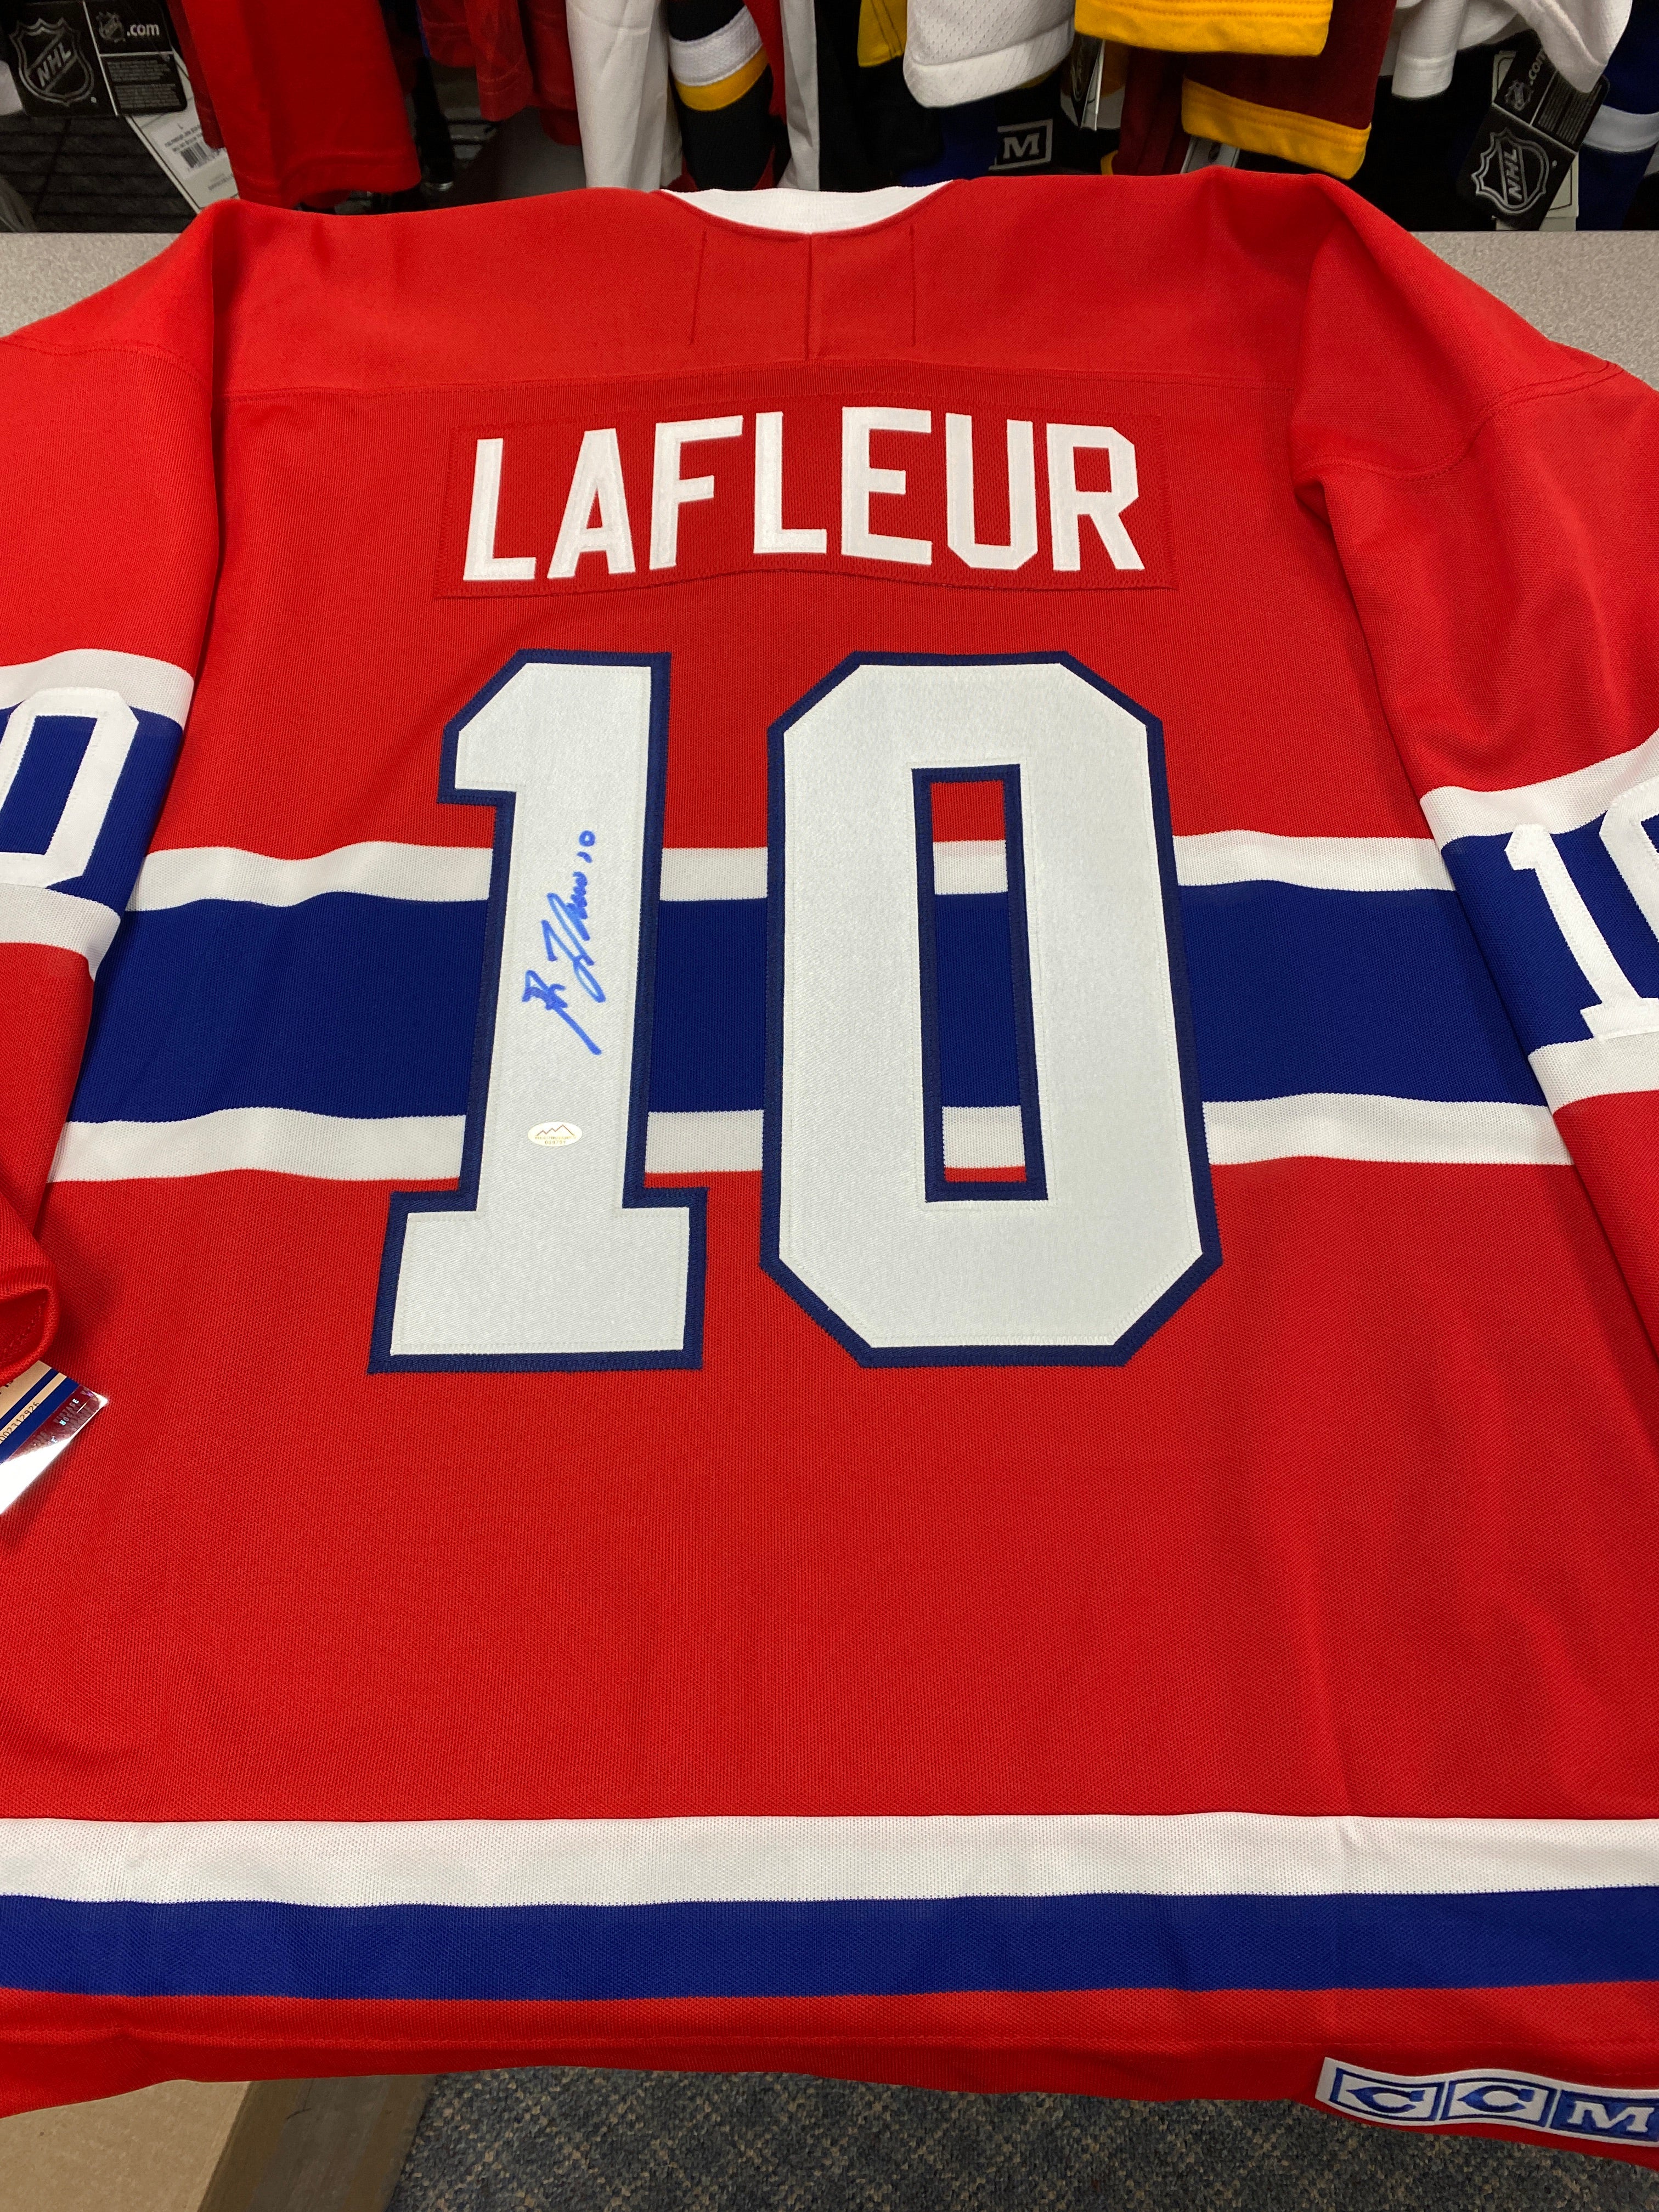 guy lafleur signed jersey authentic